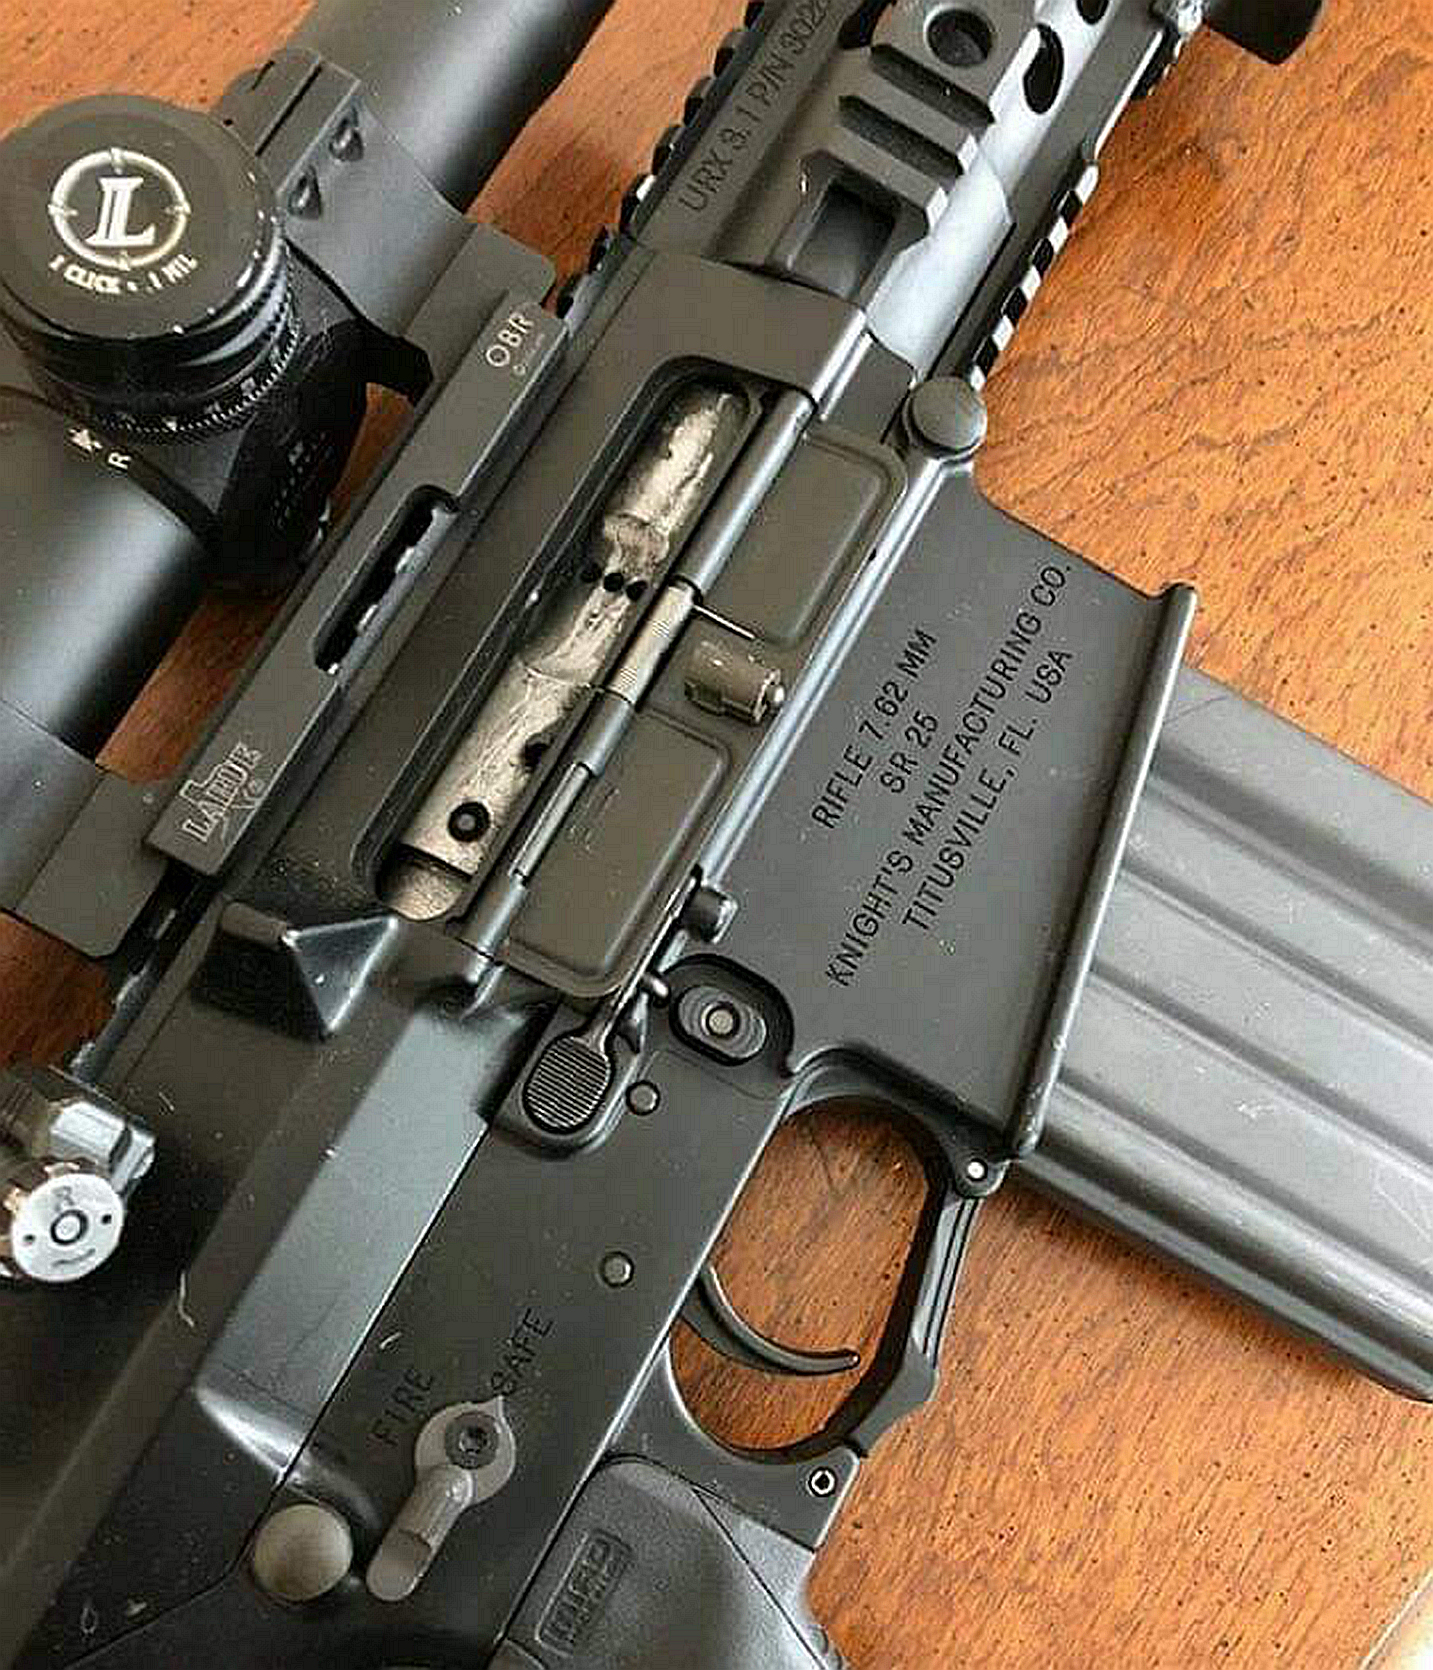 xm15步枪图片